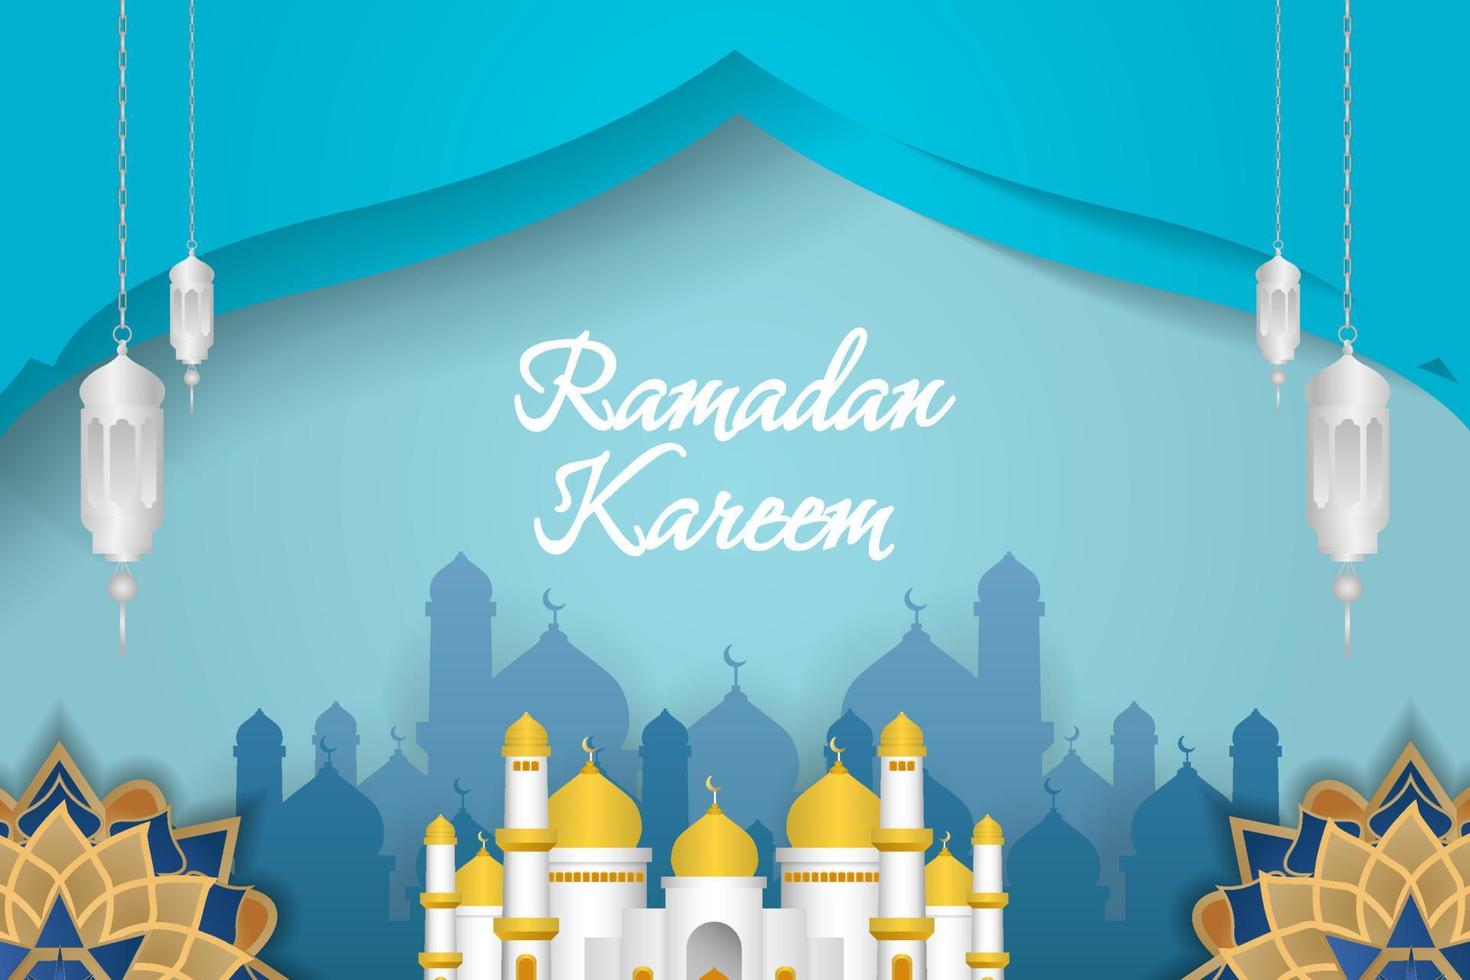 Ramadan Kareem Islamic style background with blue color vector